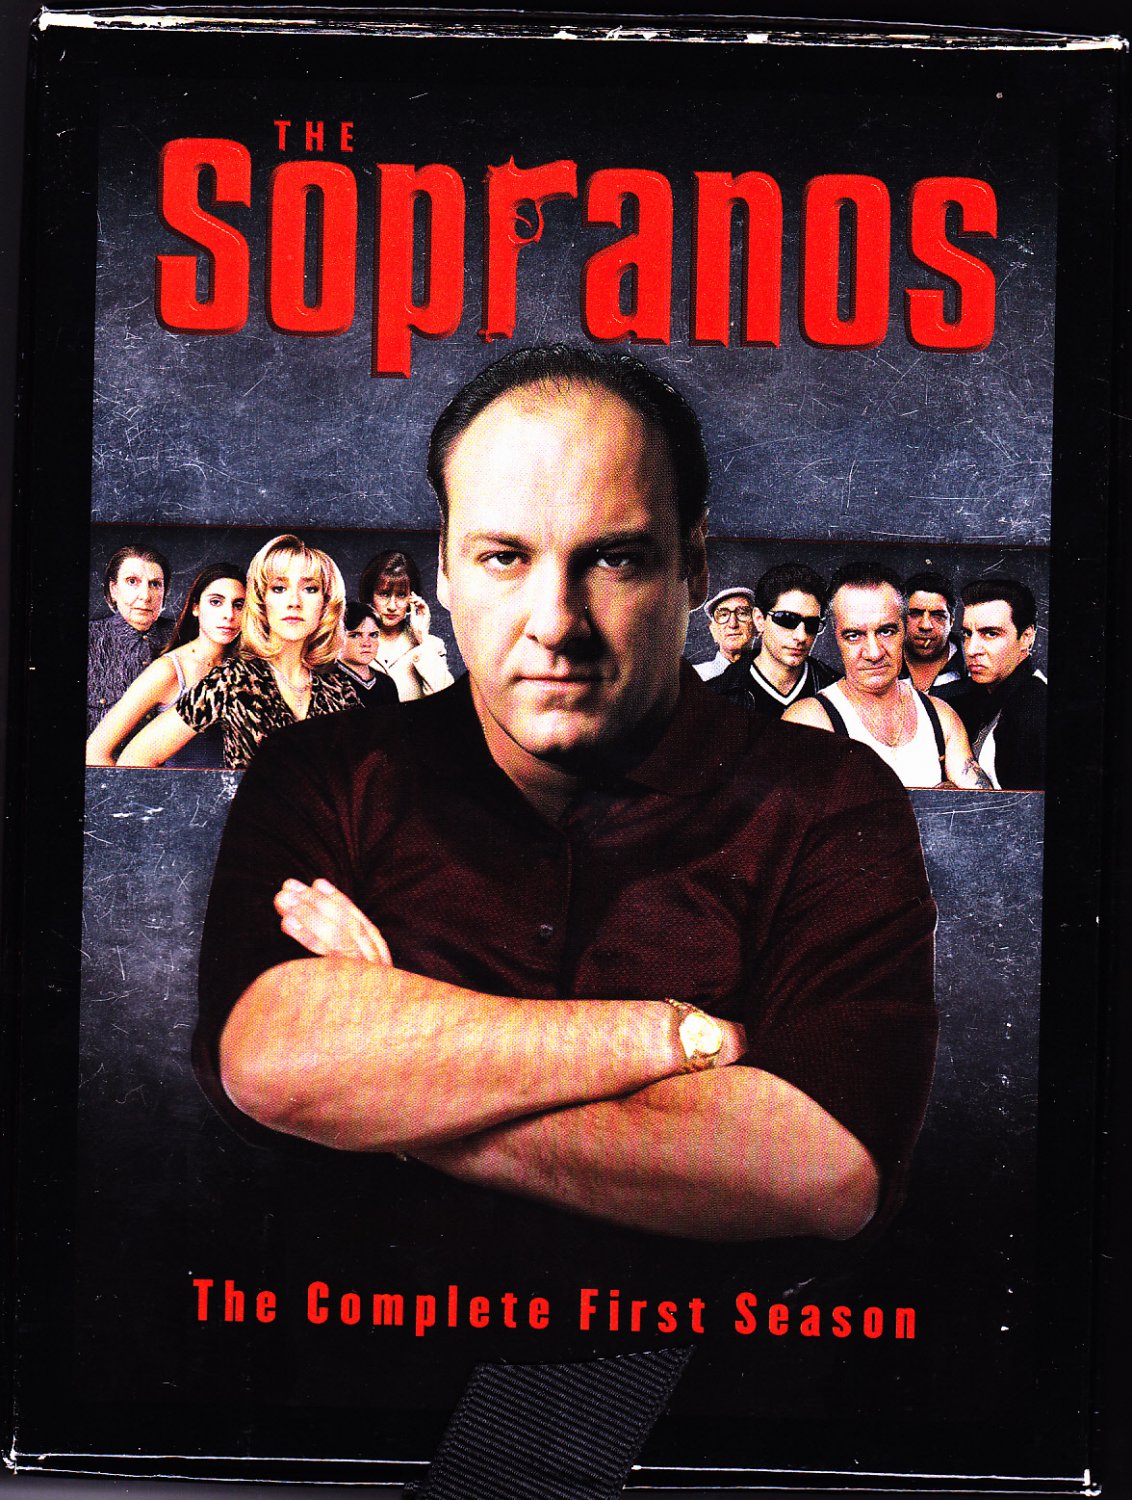 Sopranos - Complete 1st Season 2000 DVD 4-Disc Set - Very Good